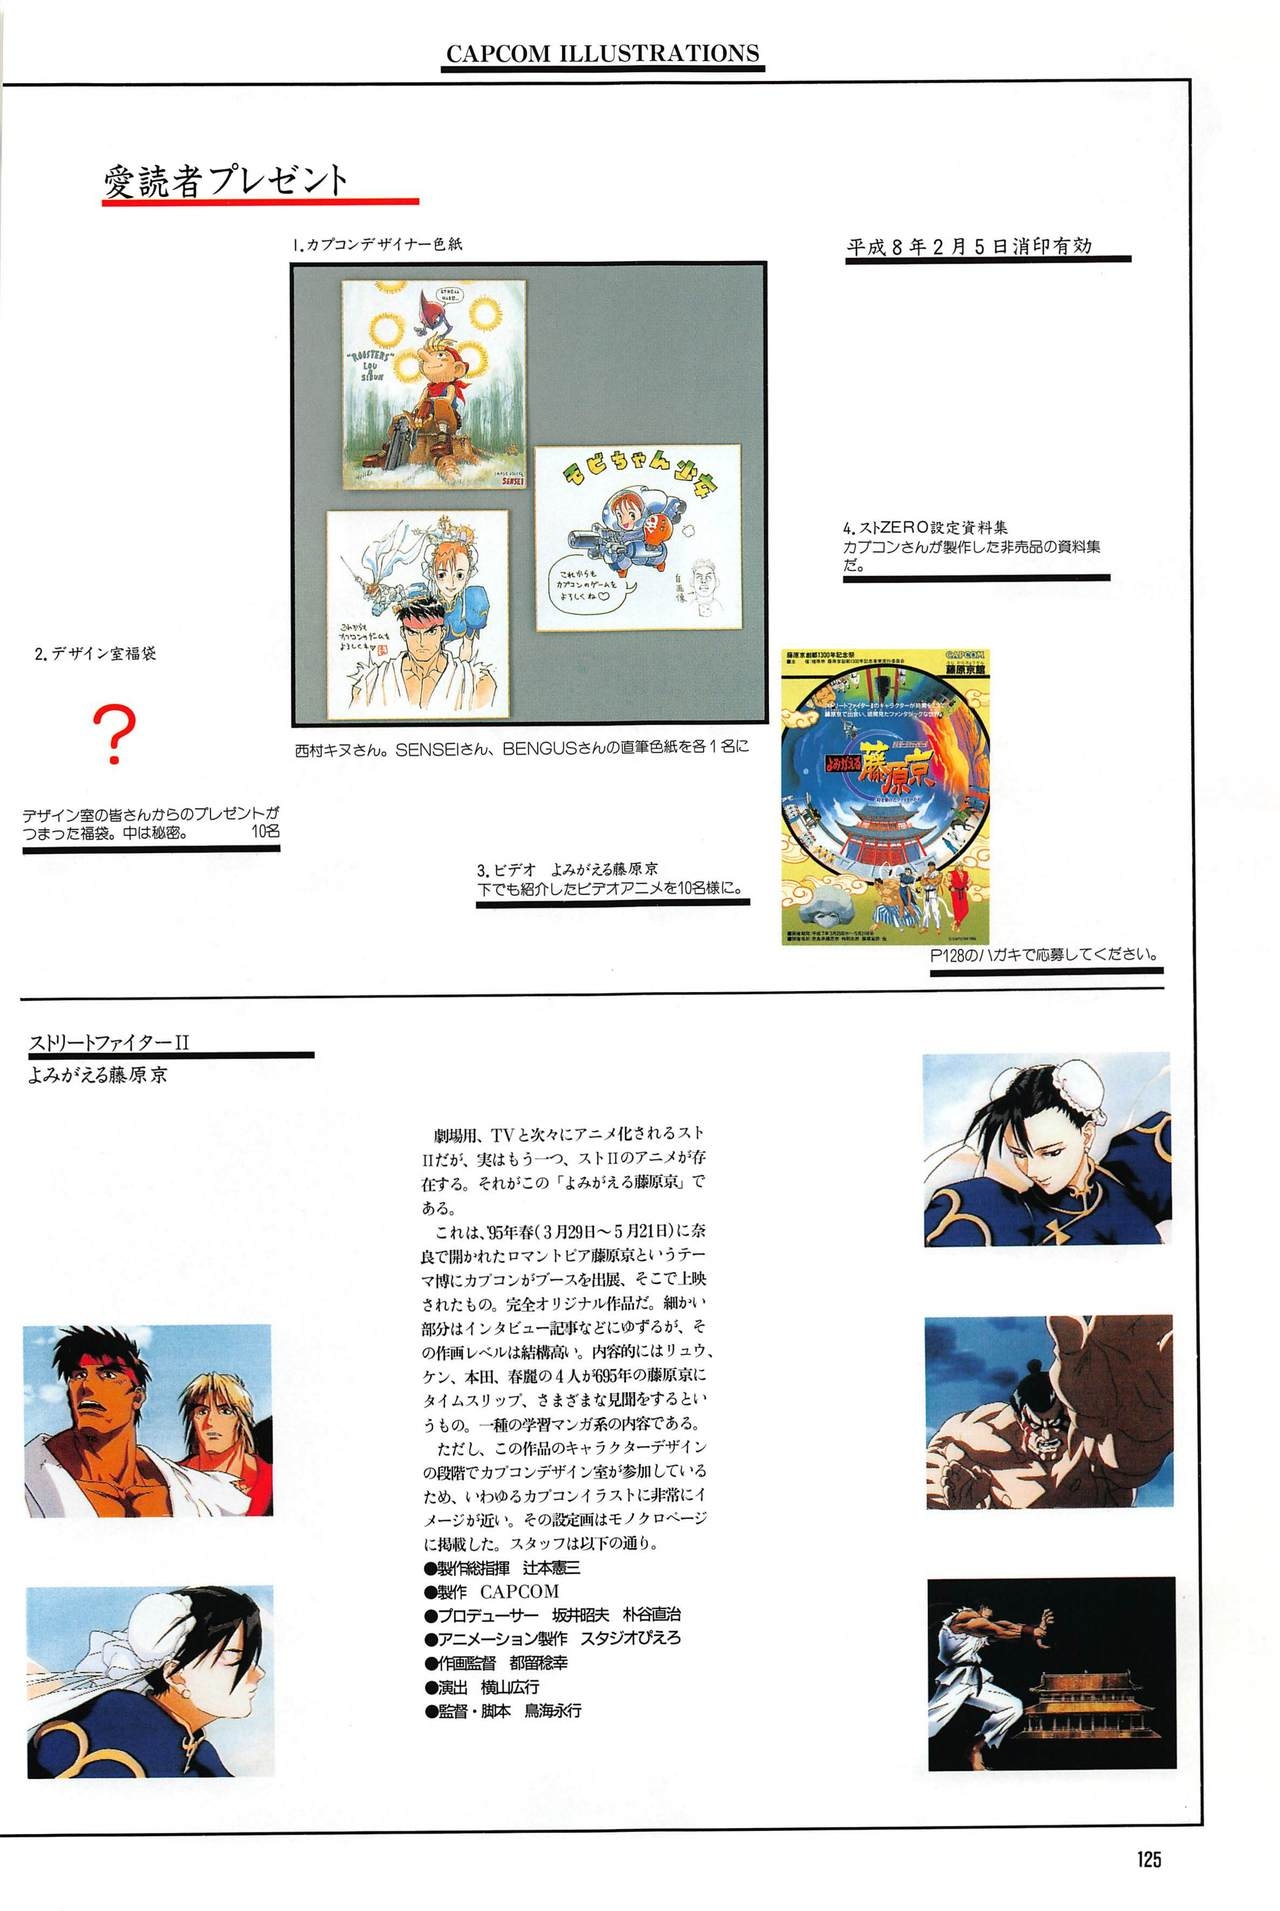 Capcom Illustrations - Gamest Mook 17  [High Quality] 128